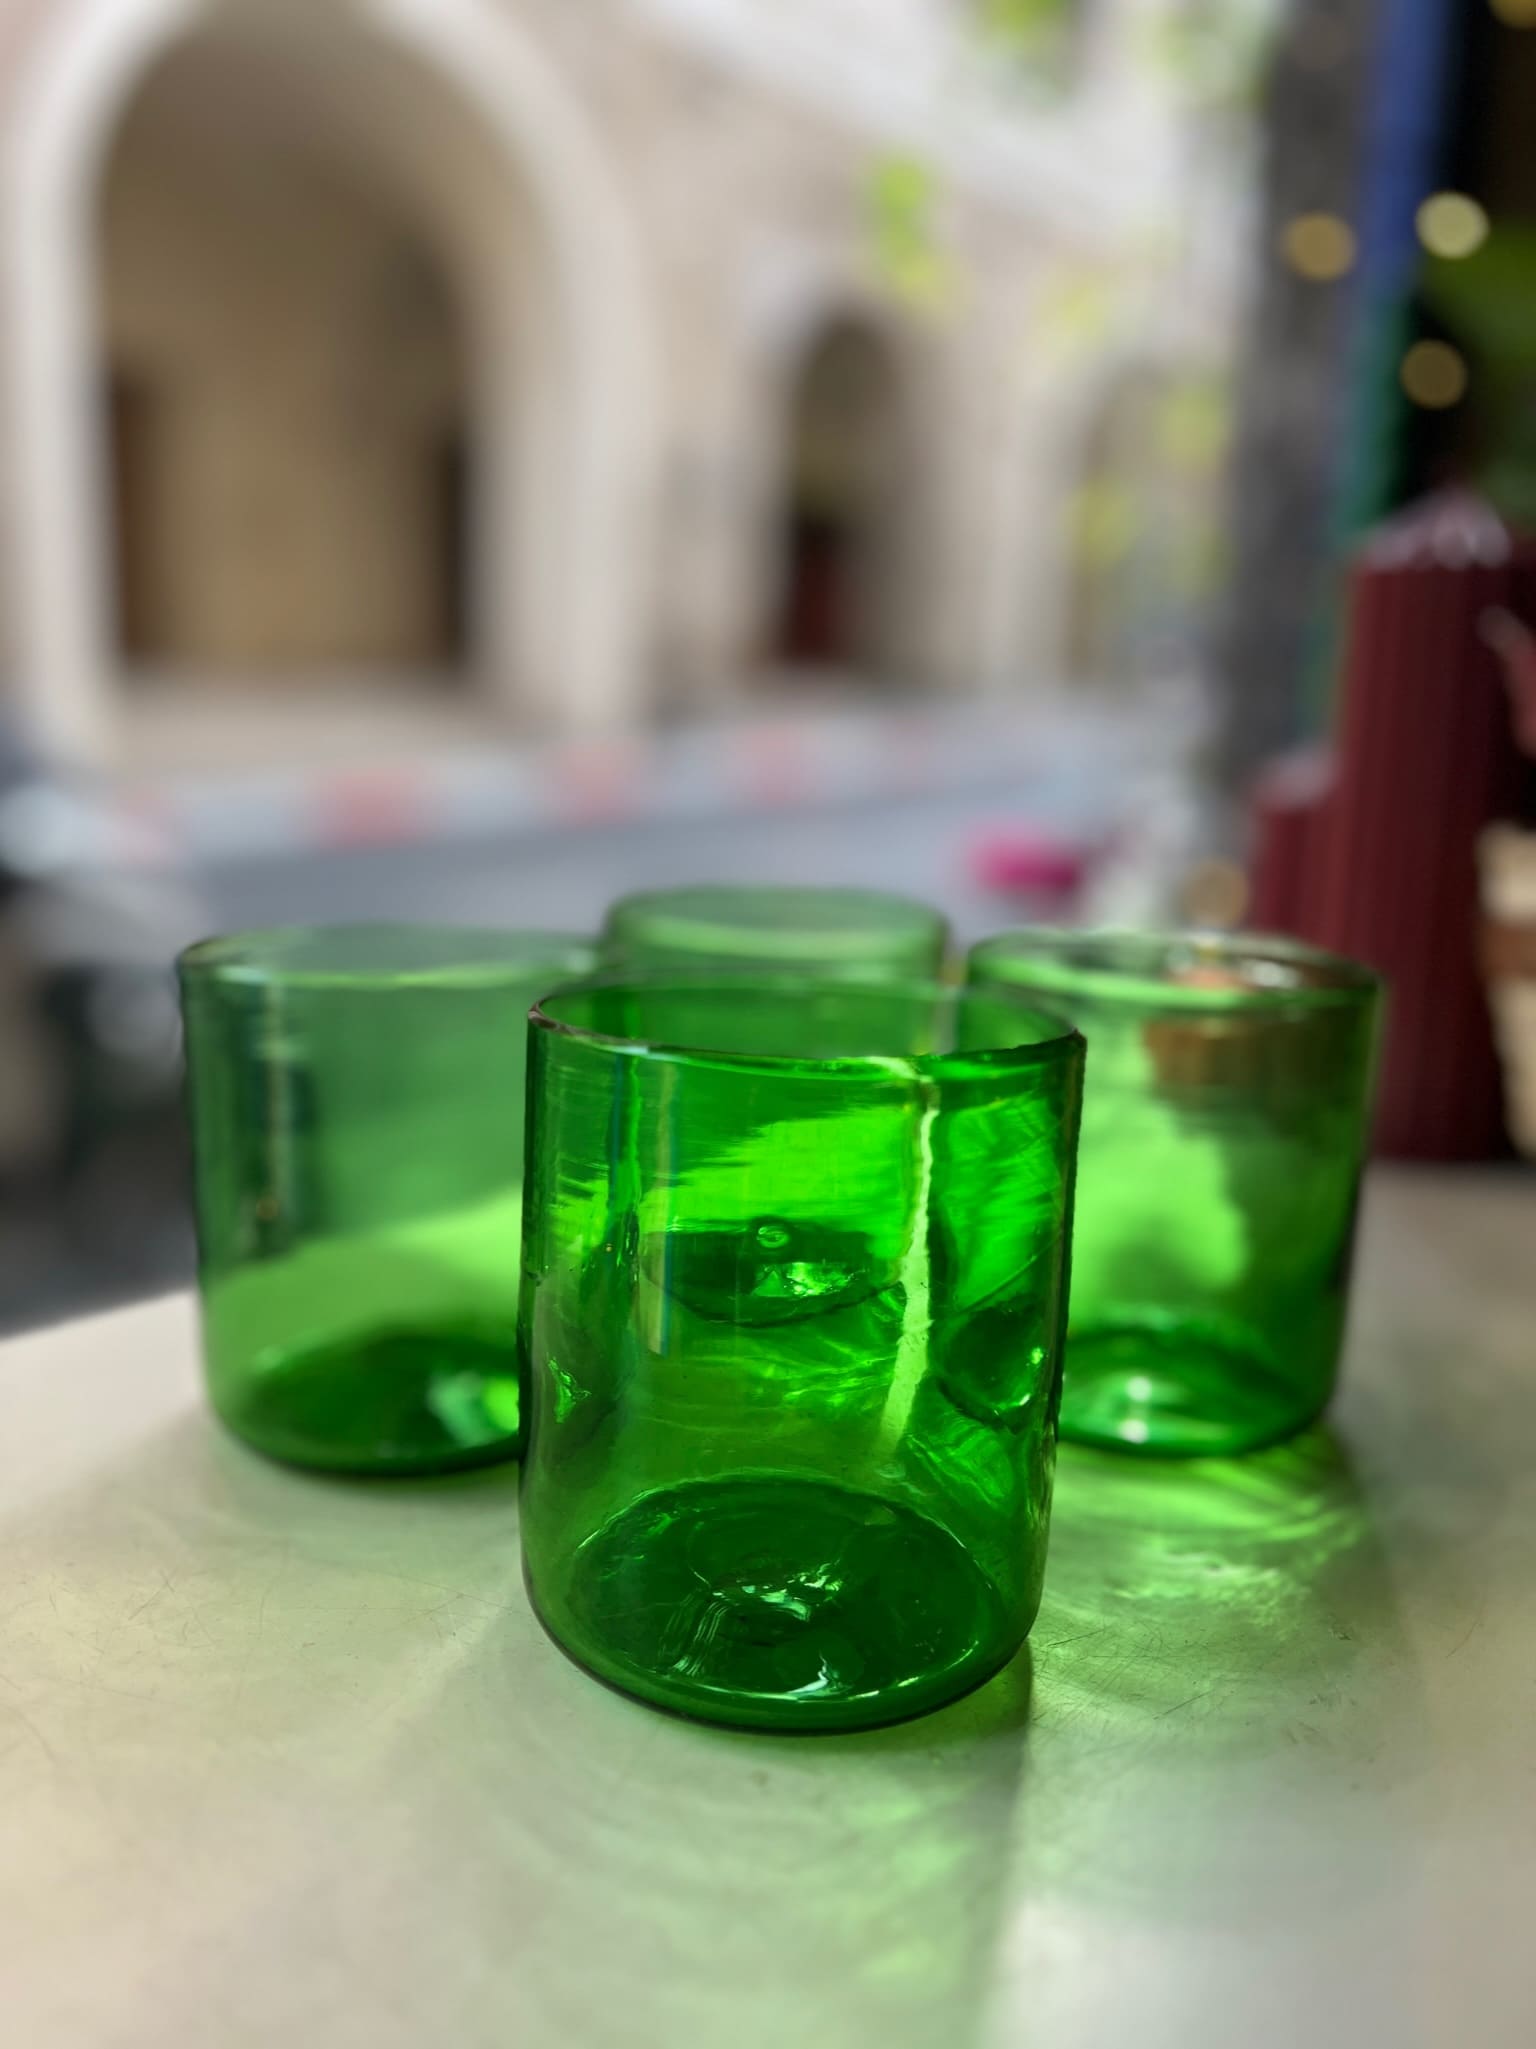 hebron-glass-cups-palestine-green